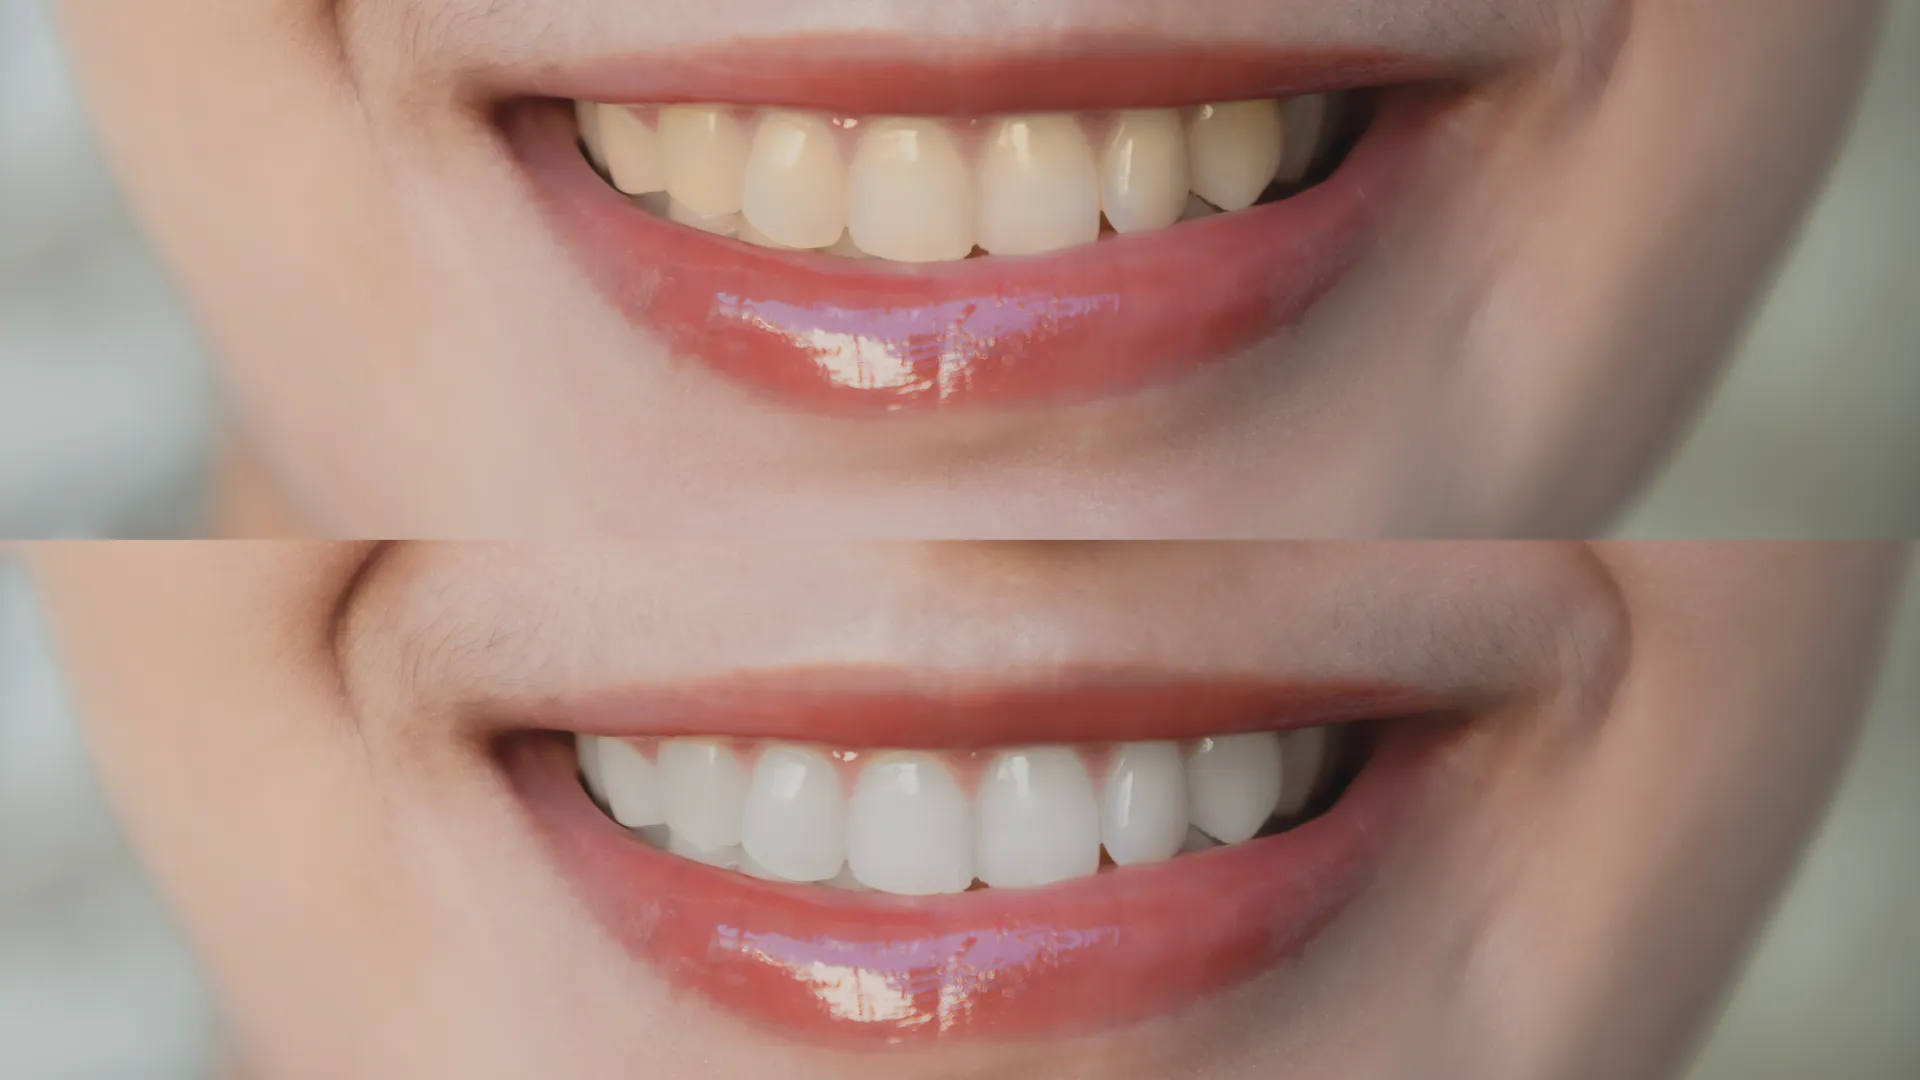 Teeth Whitening Longevity